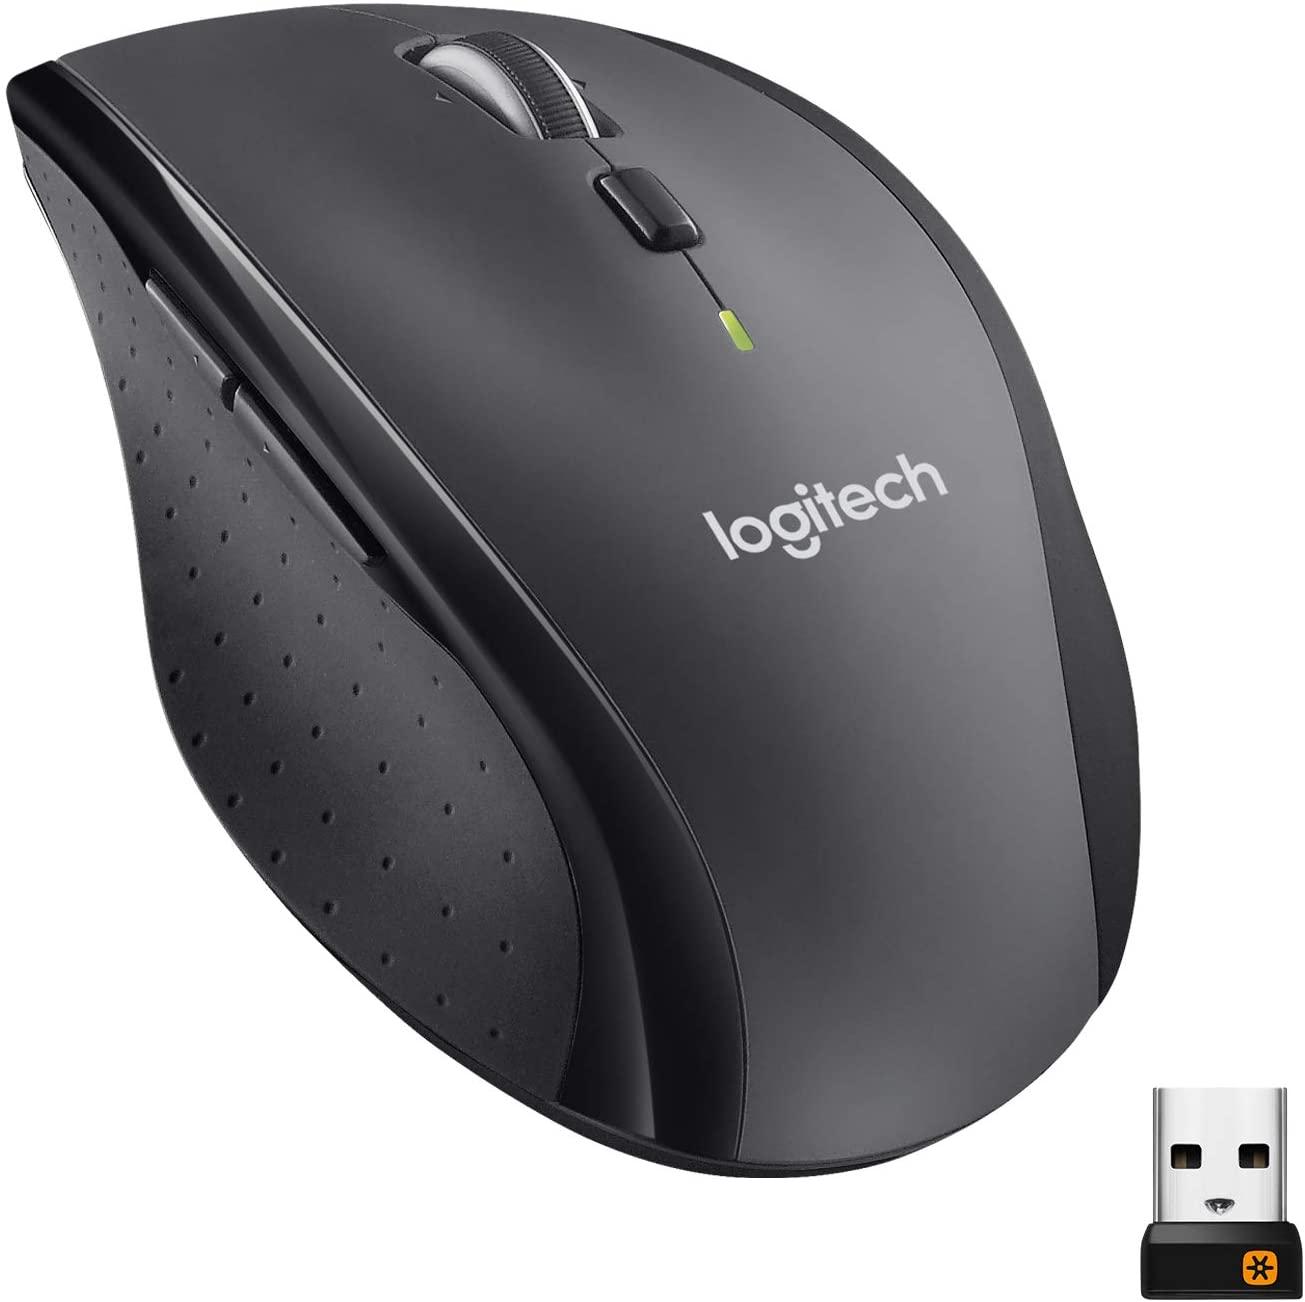 Logitech M705 Wireless Marathon Mouse for $19.99 Shipped